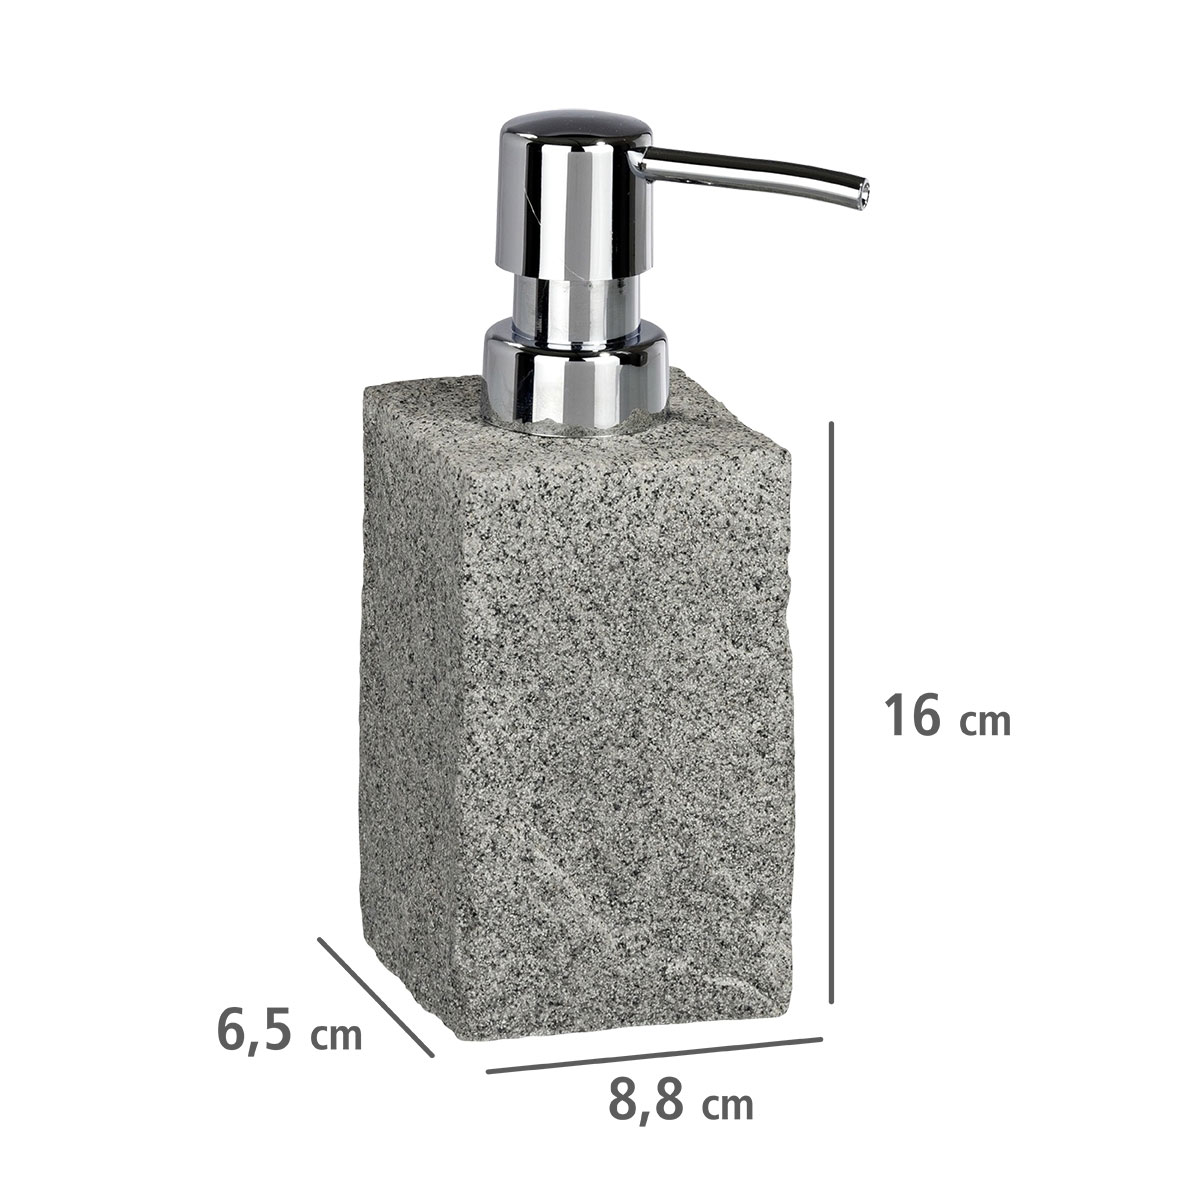 Seifenspender „Granit“, ca. 215 ml